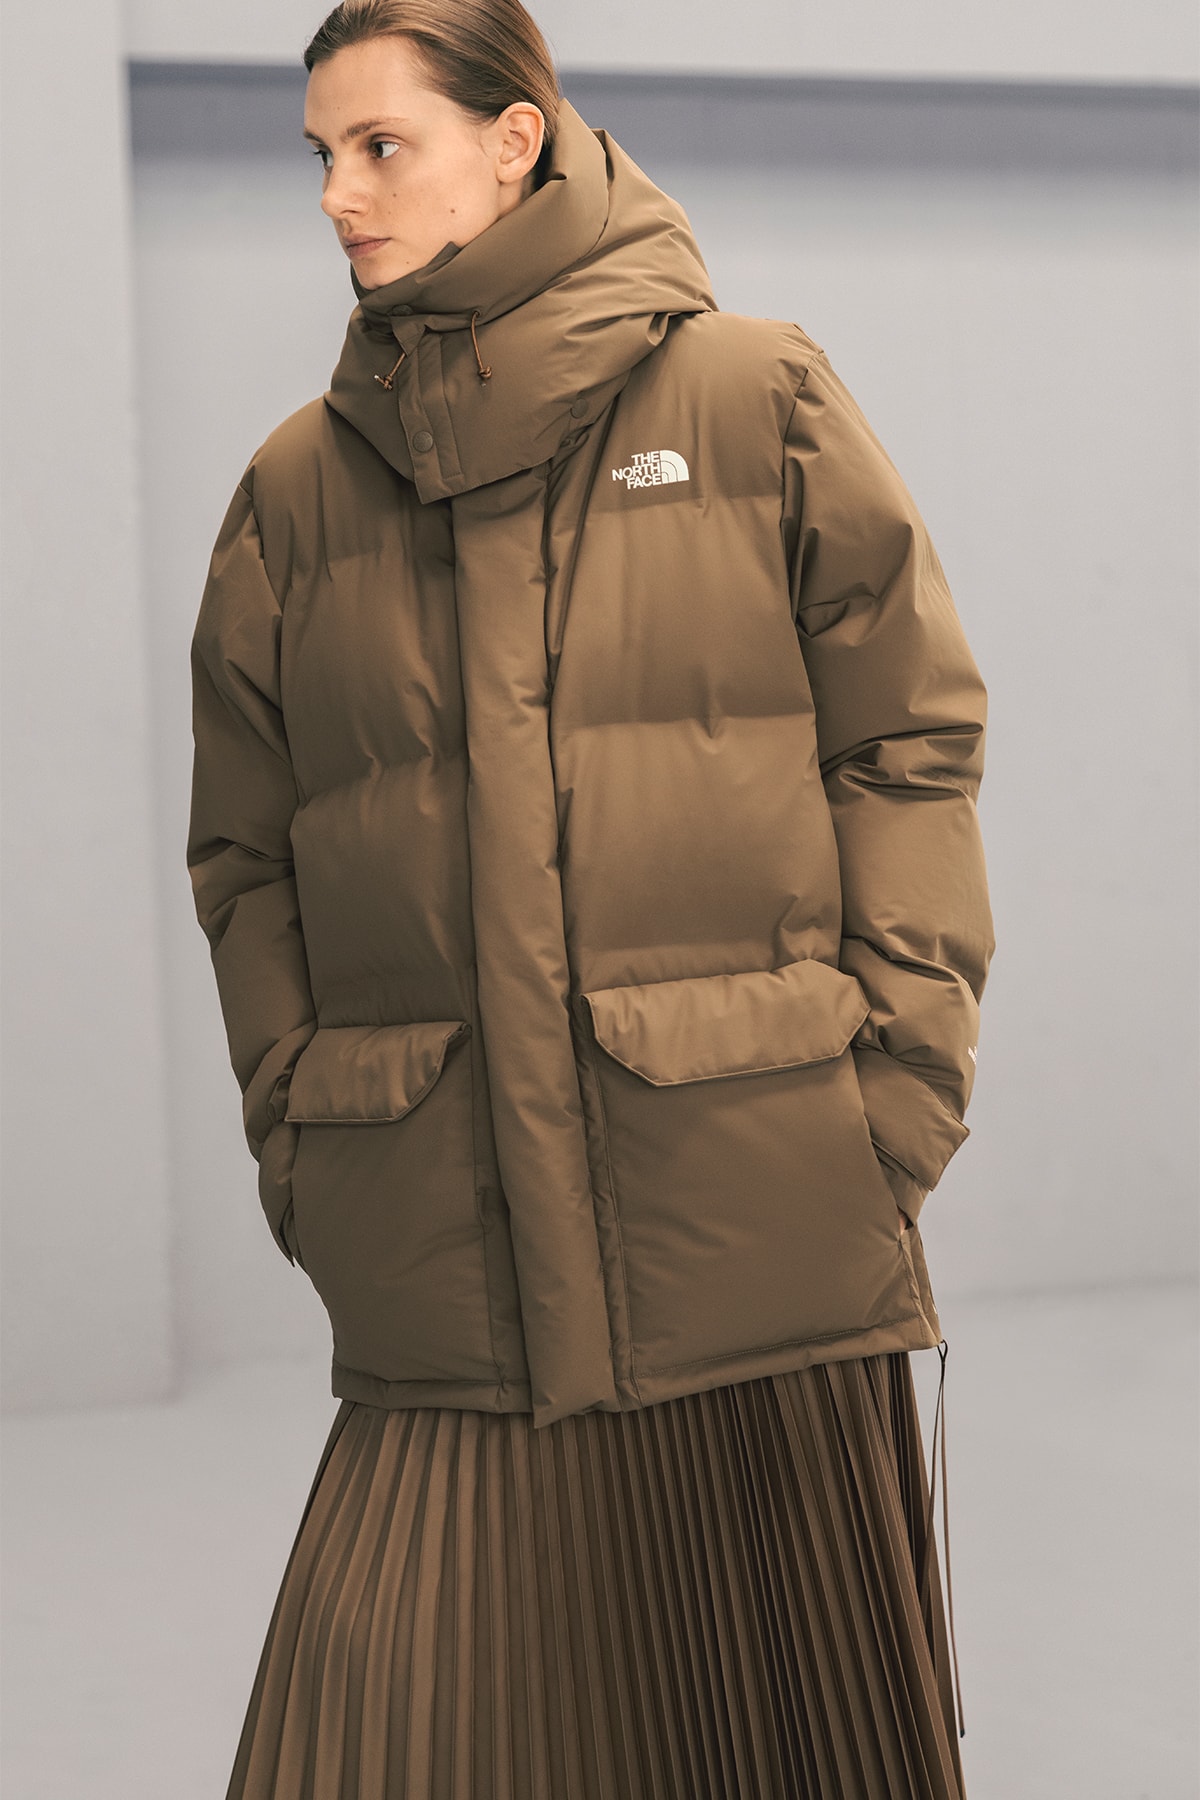 The North Face x HYKE Fall/Winter 2018 Lookbook Outerwear Jackets Puffers Silhouette Streetwear FW 18